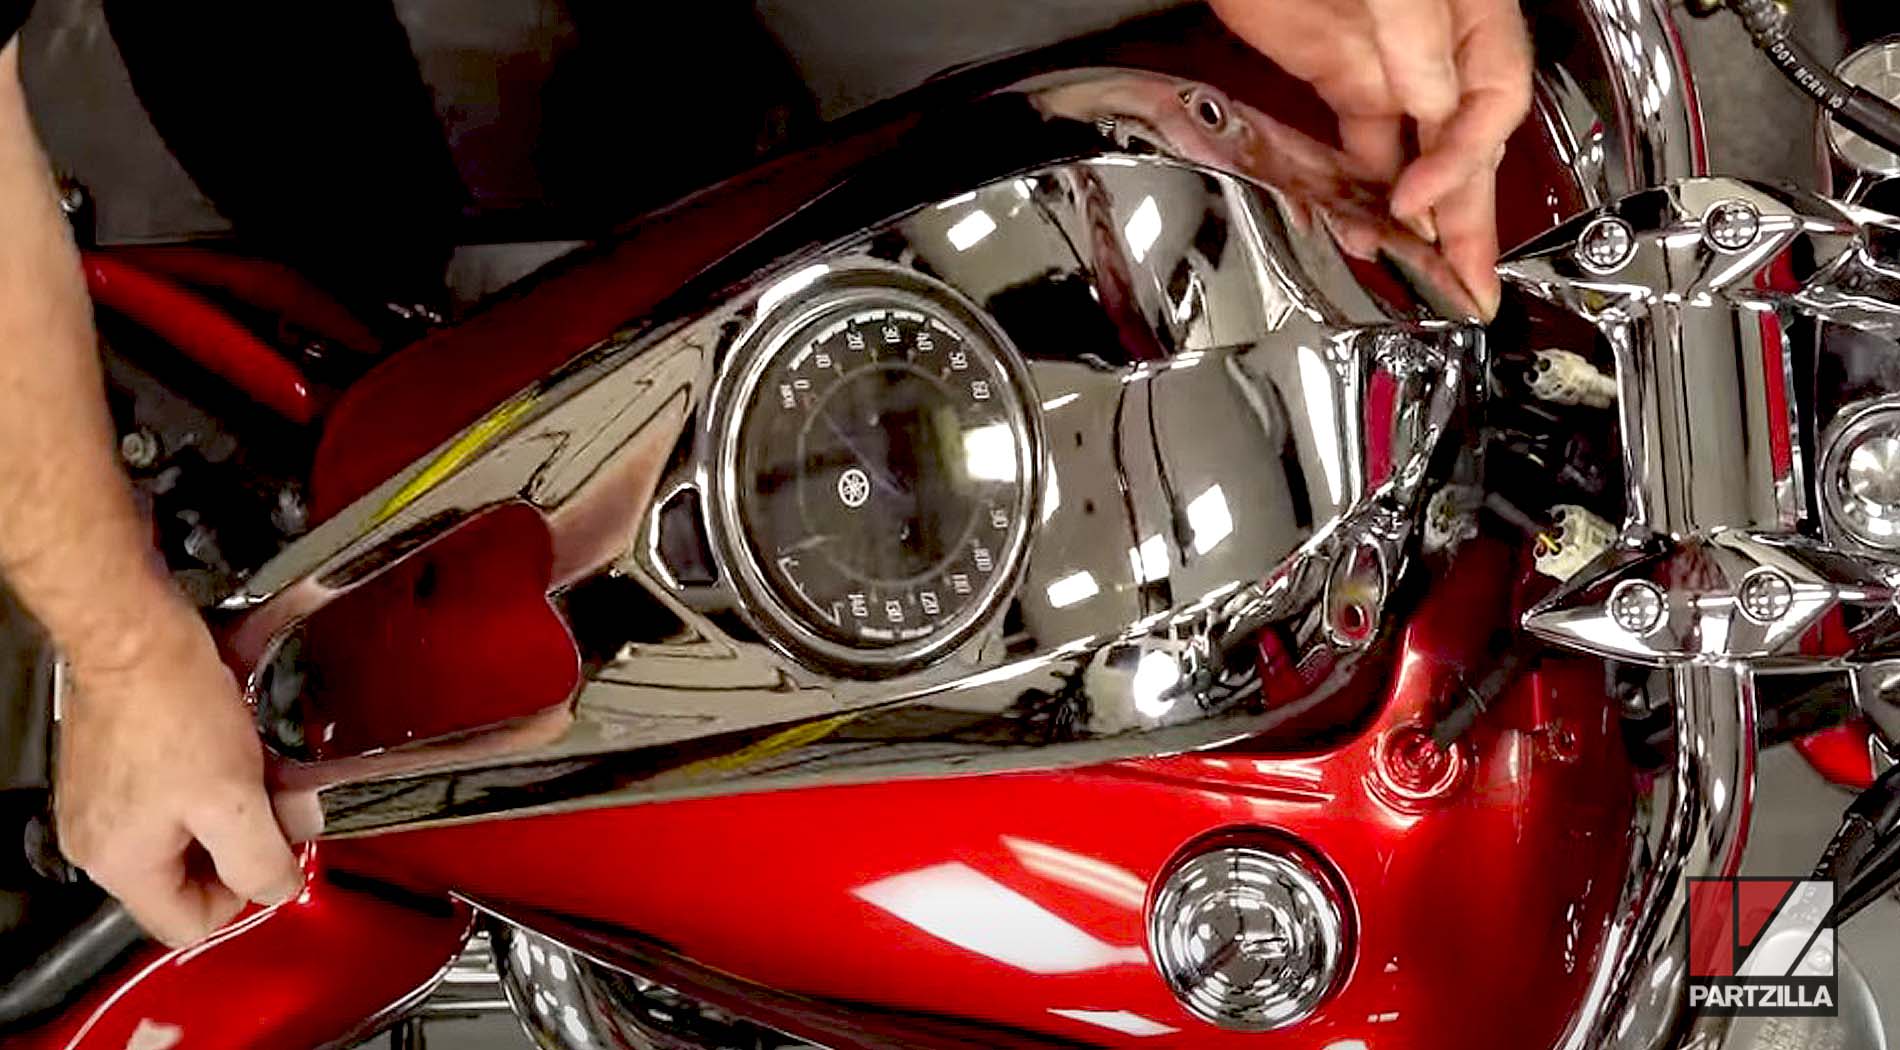 Yamaha Raider motorcycle spark plugs change